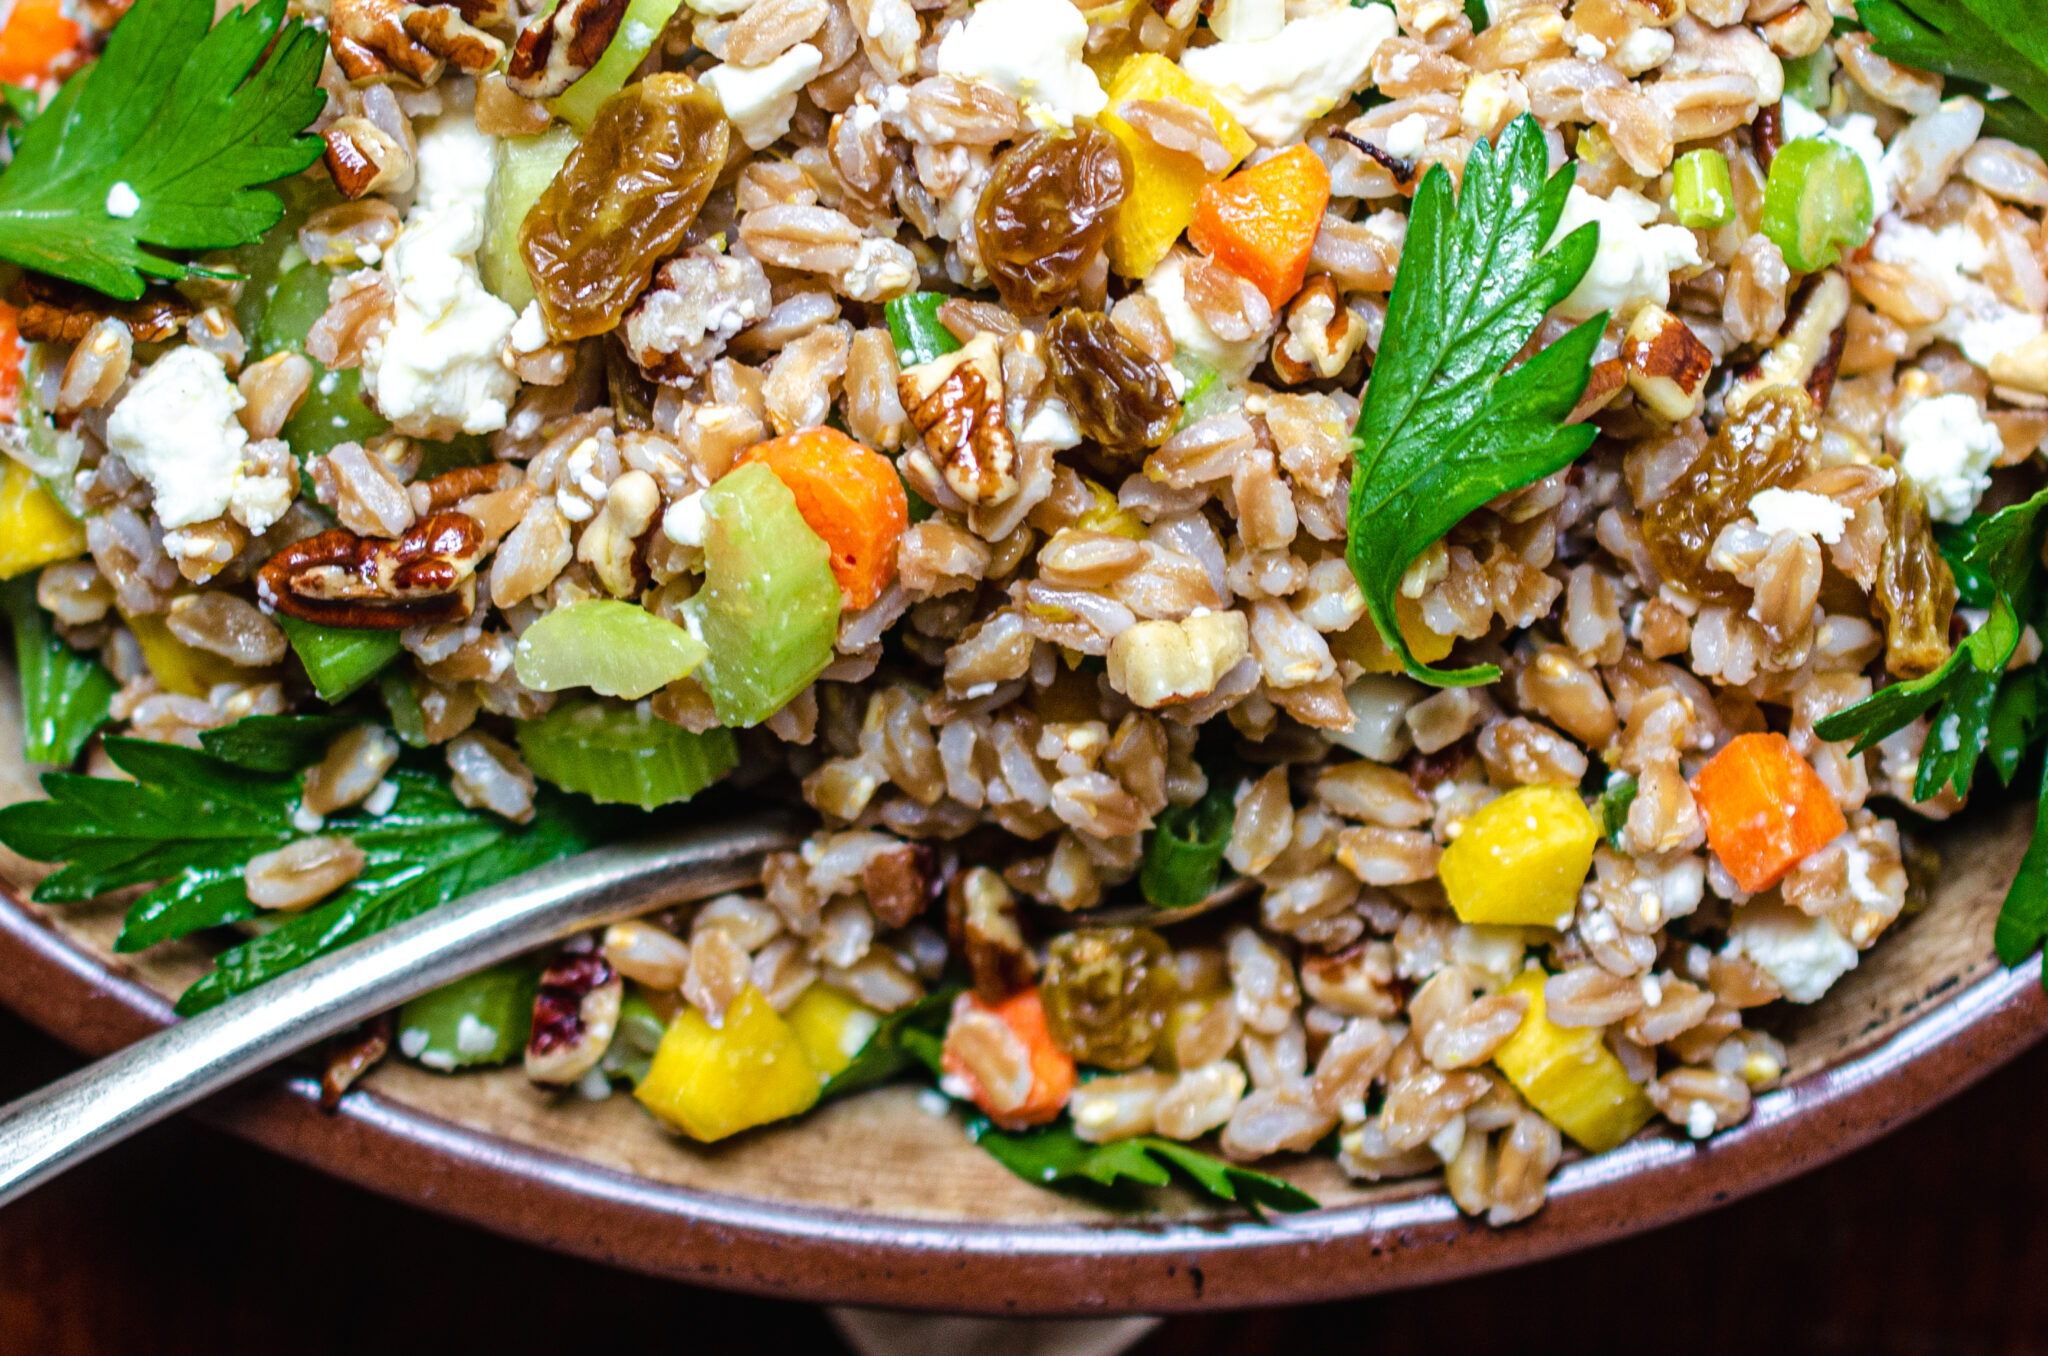 healthy side dishes on virginiawillis.com including Farro Salad 